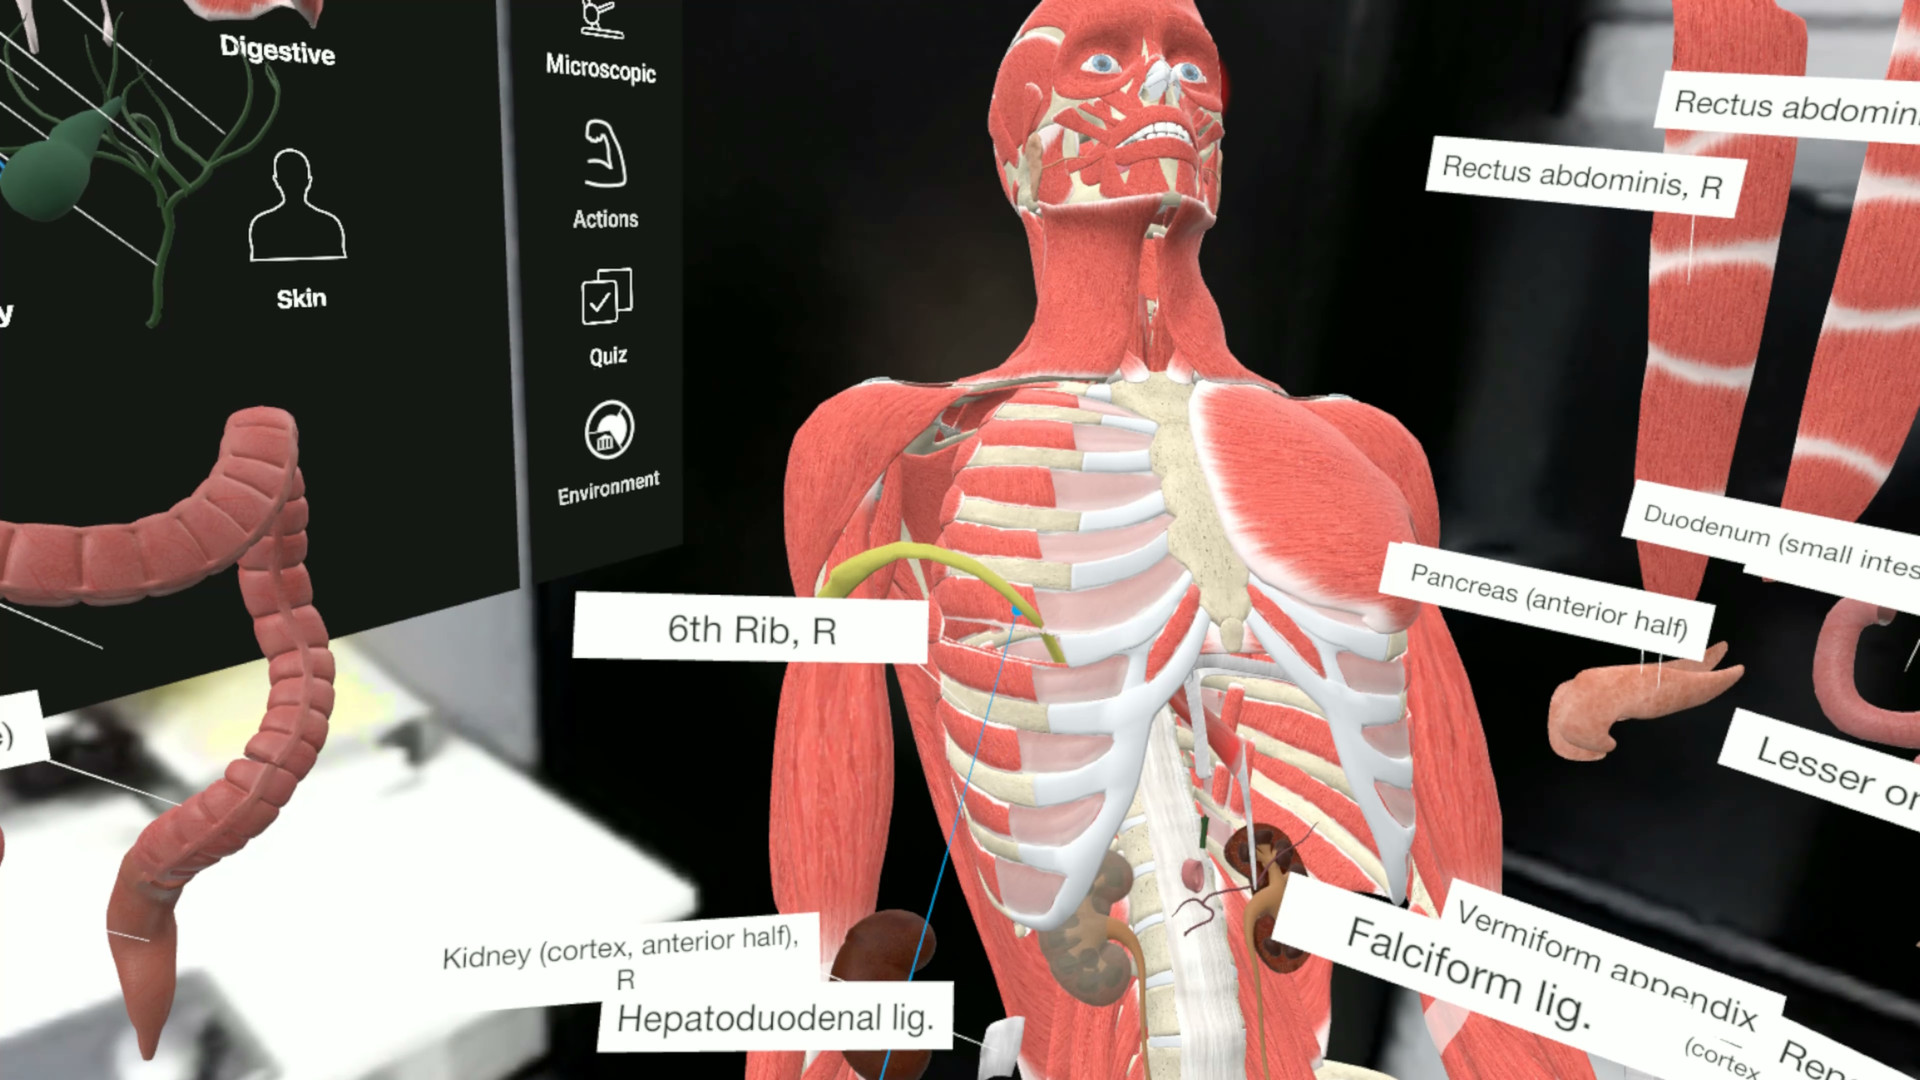 best 3d anatomy program software